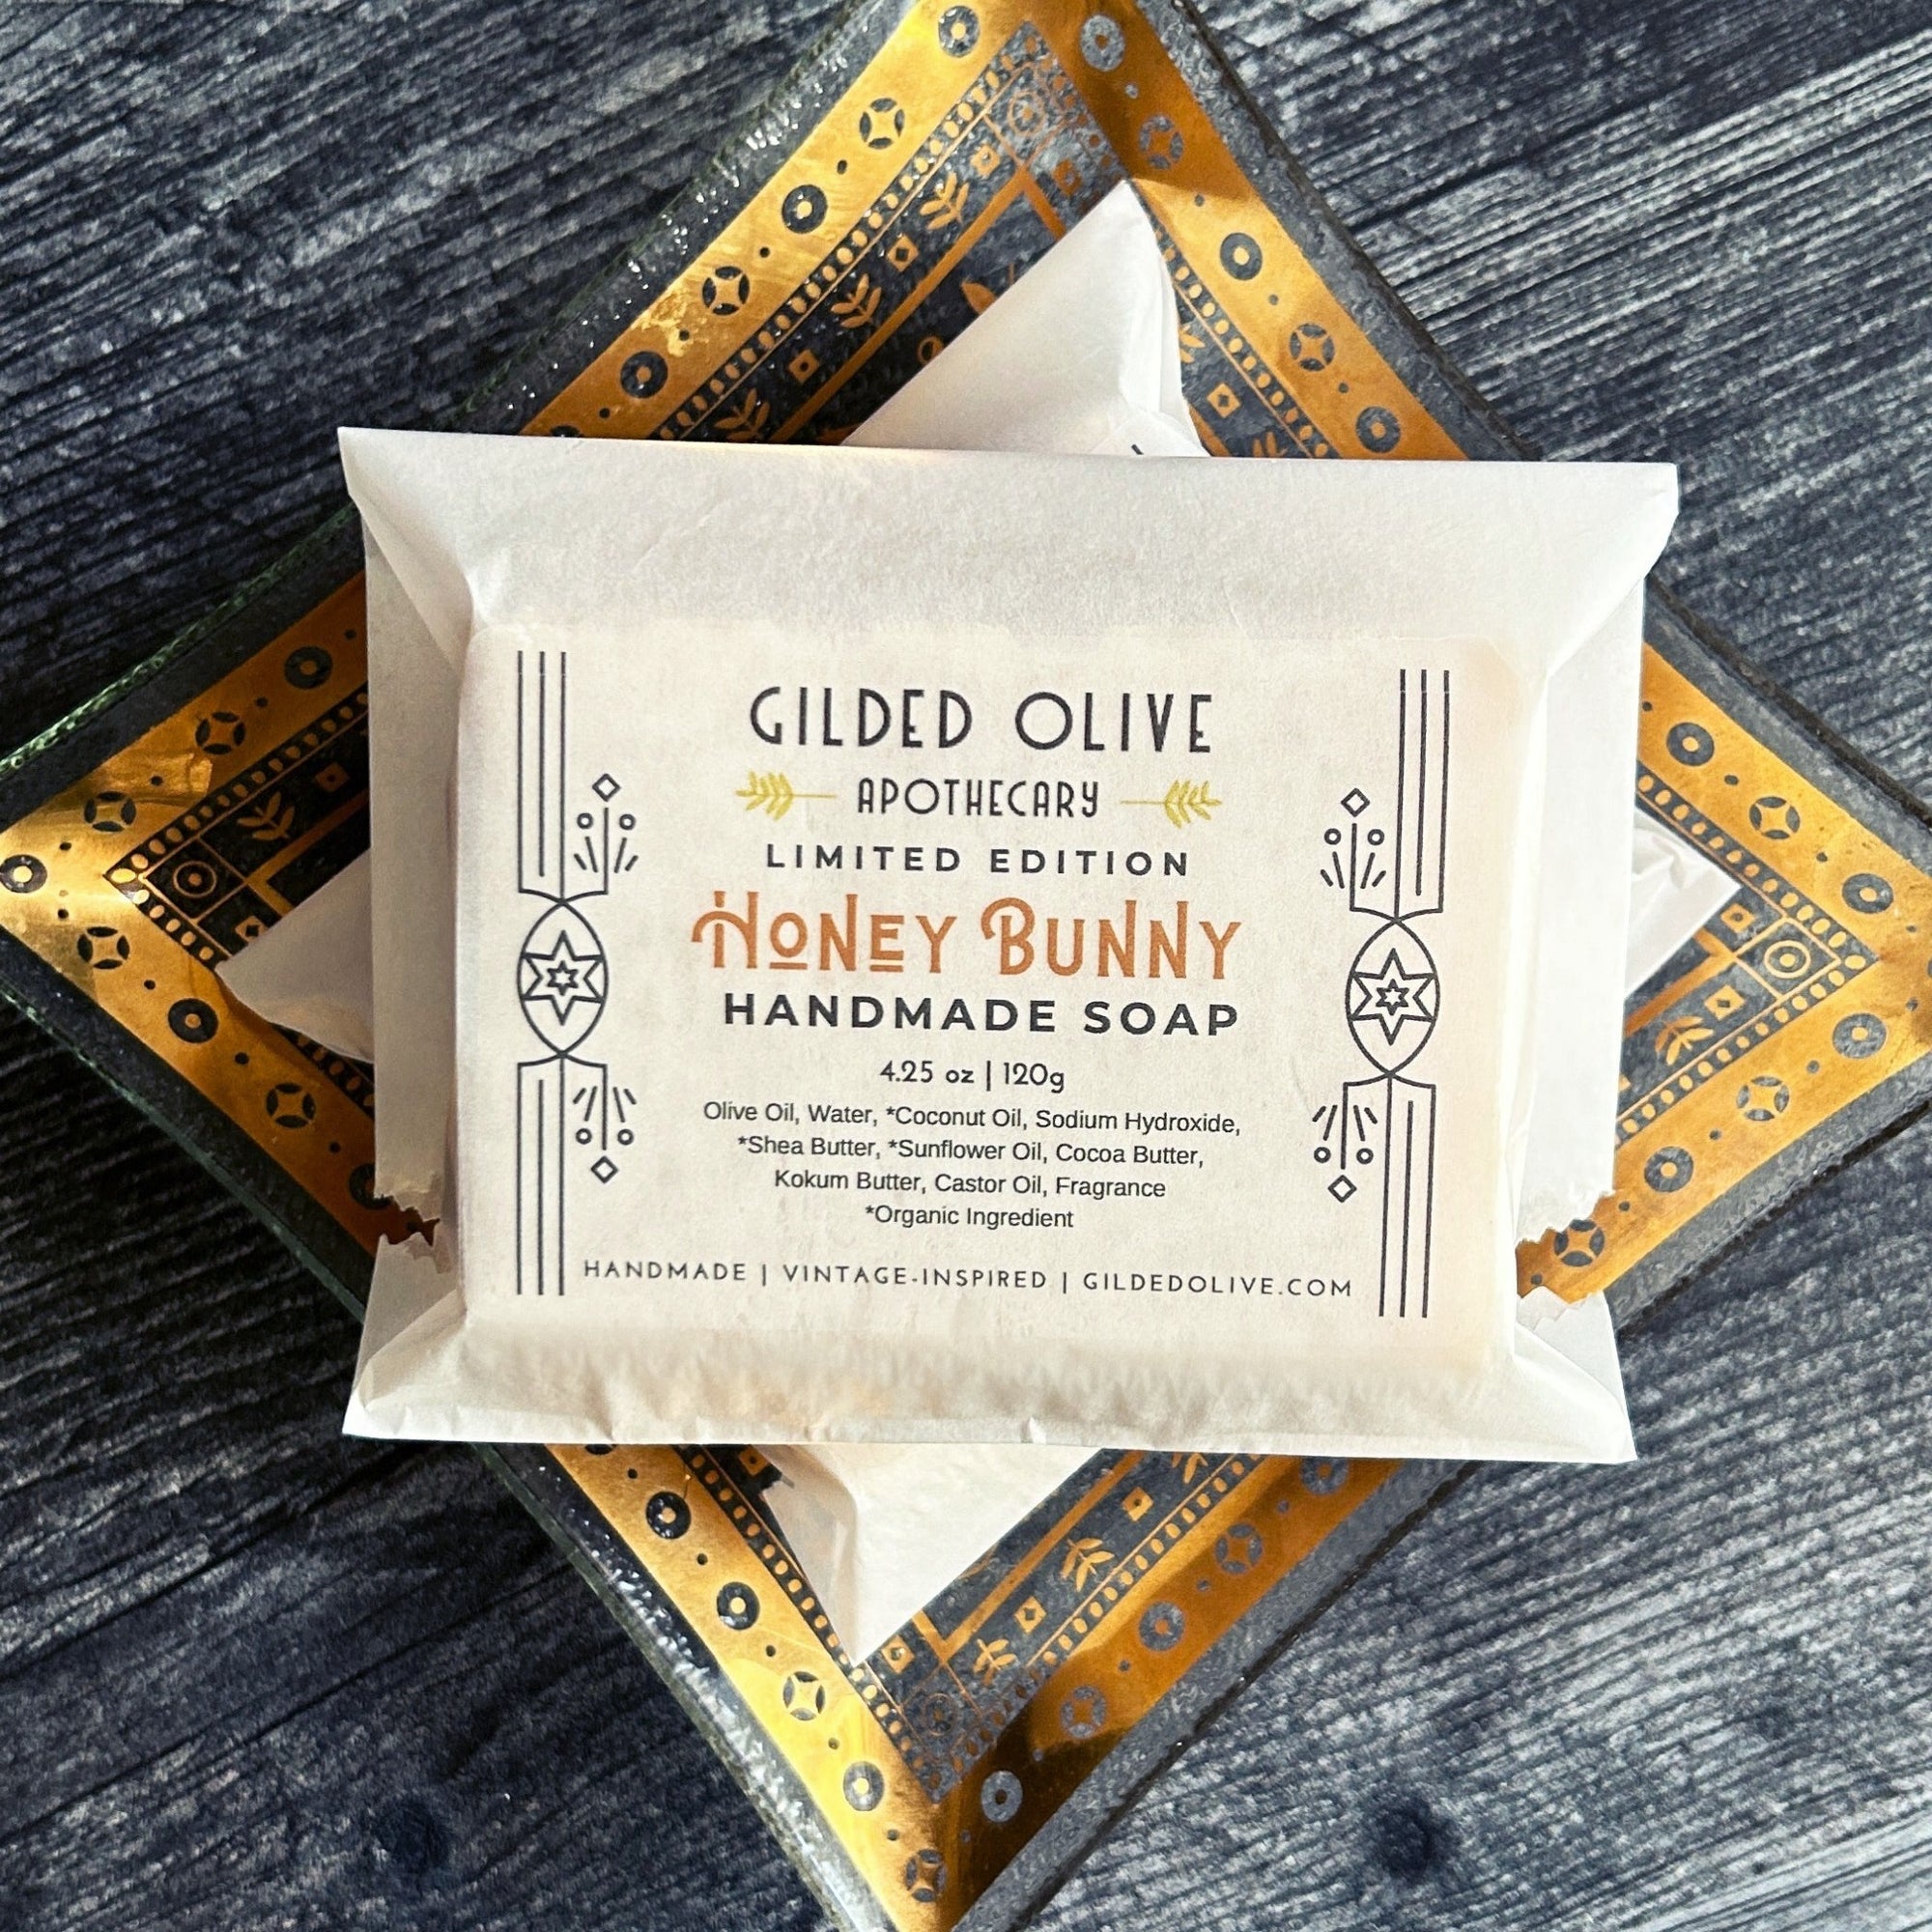 Honey Bunny Handmade Soap, packaged